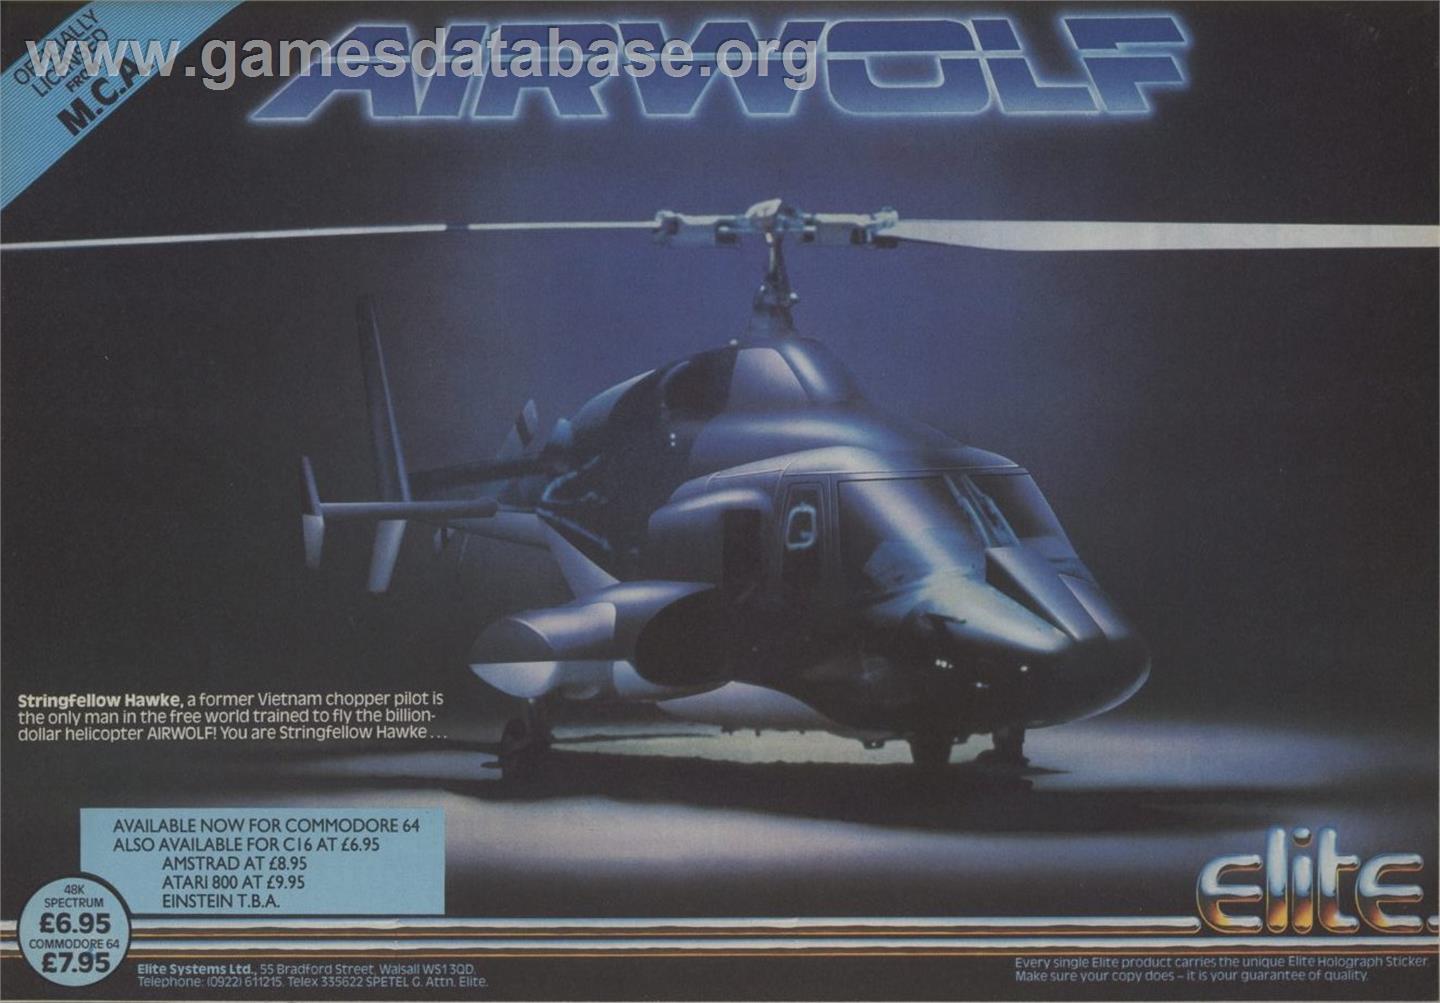 Airwolf - Commodore 64 - Artwork - Advert